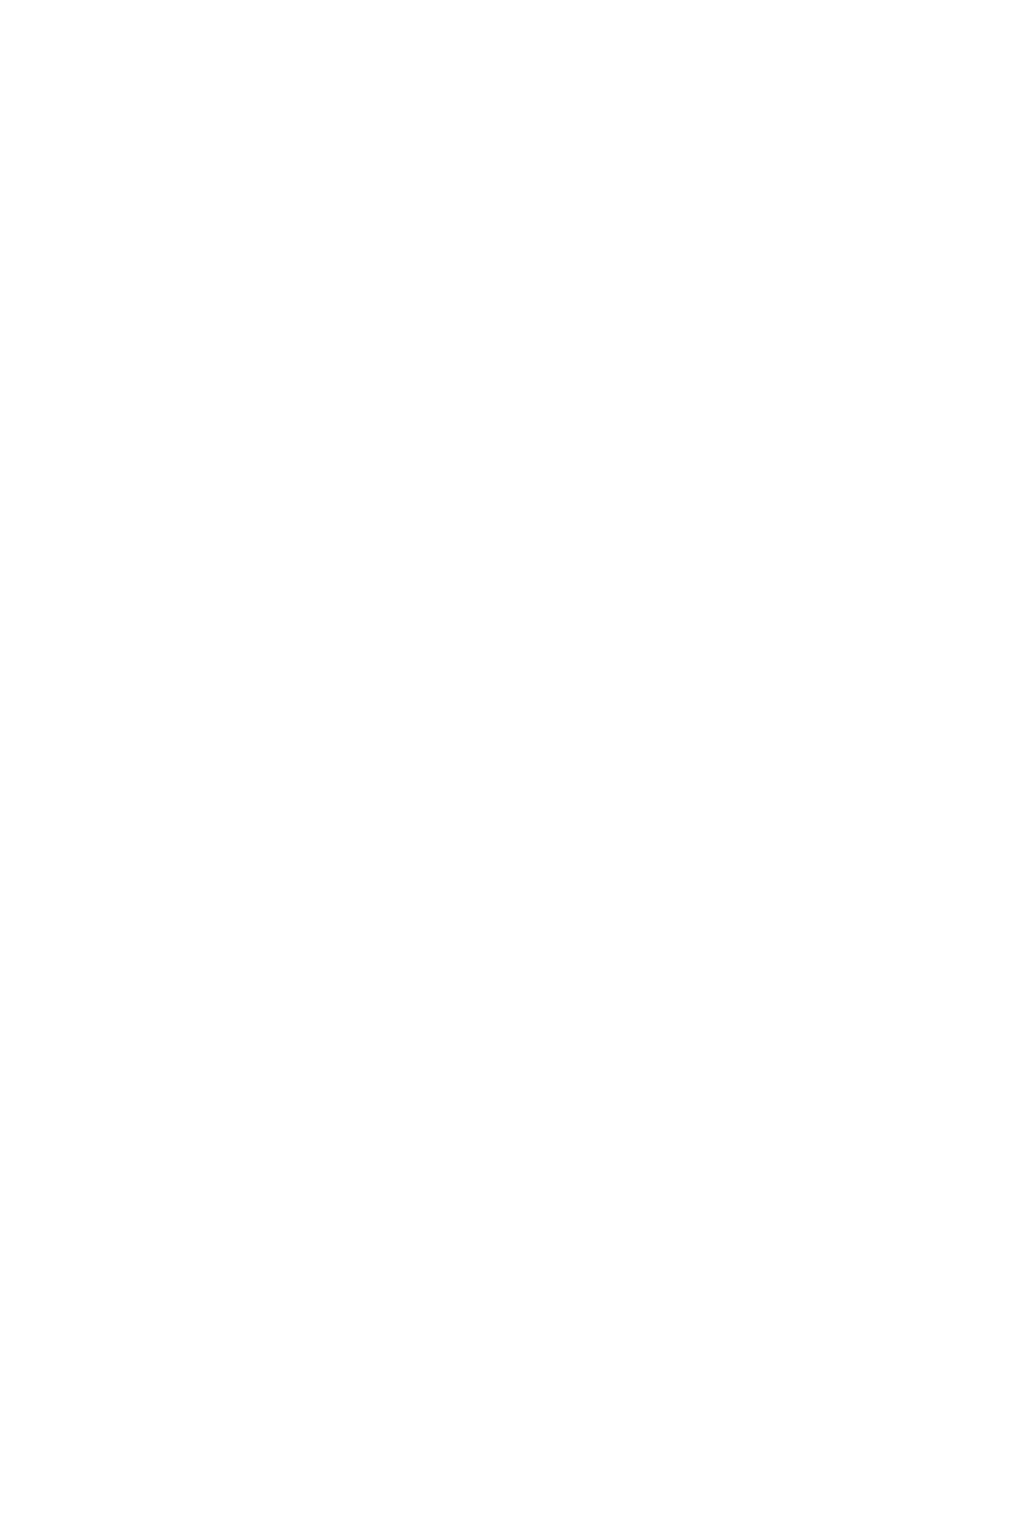 Danielle Levitt lifestyle sports photography environmental portrait of teenage jock high school wrestler wearing colorful wrestling uniform against black mat wall in indoor gymnasium for Boys By Girls magazine editorial